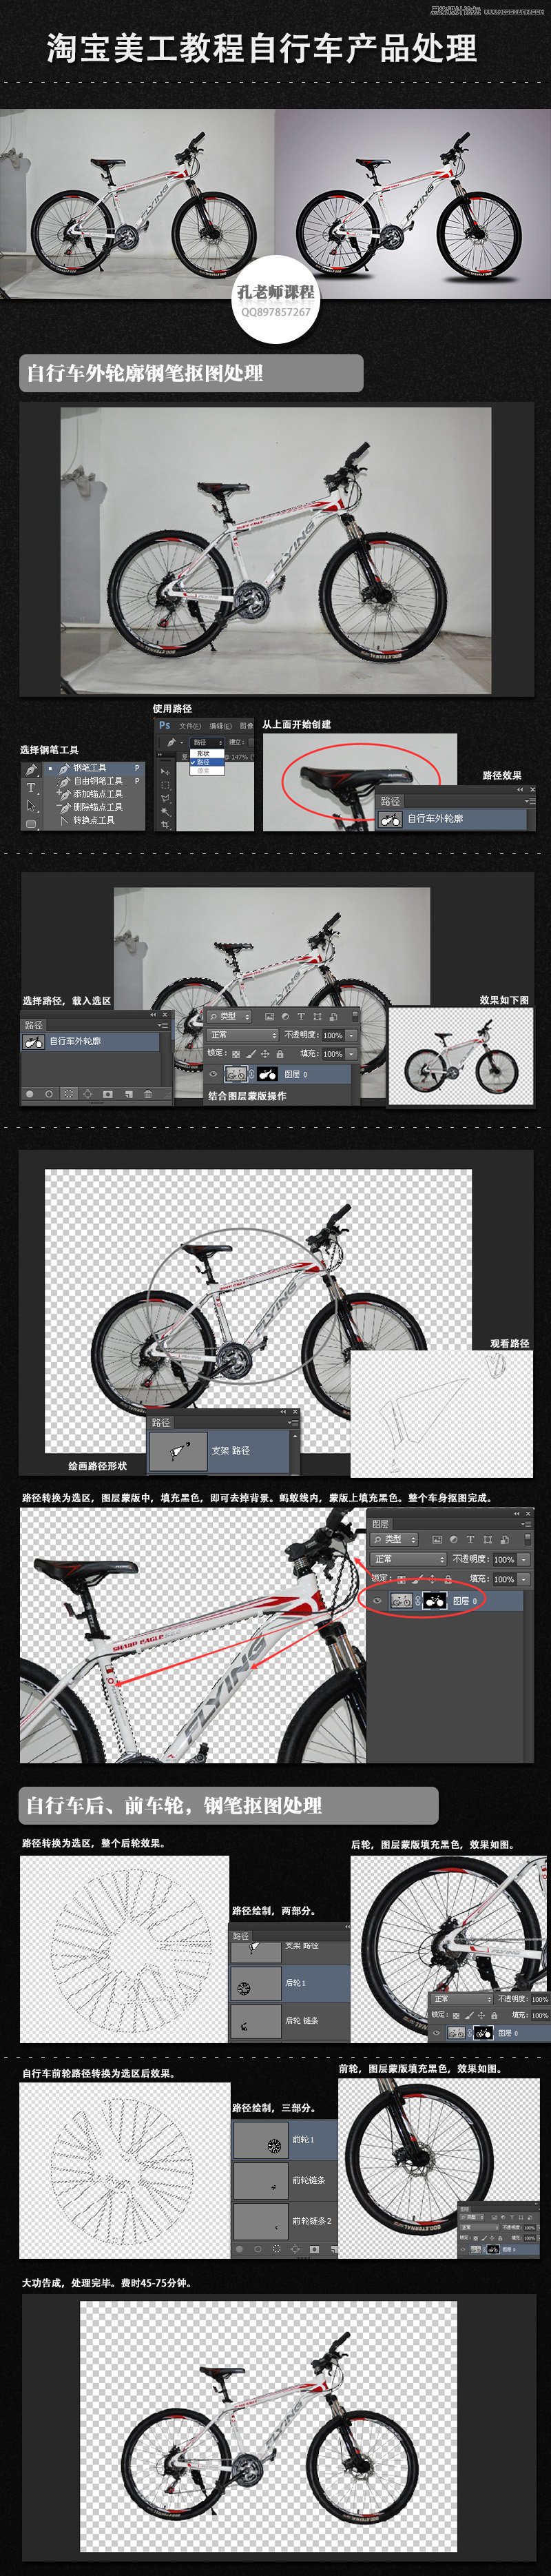 Photoshop详细解析电商自行车产品修图过程,PS教程,图老师教程网